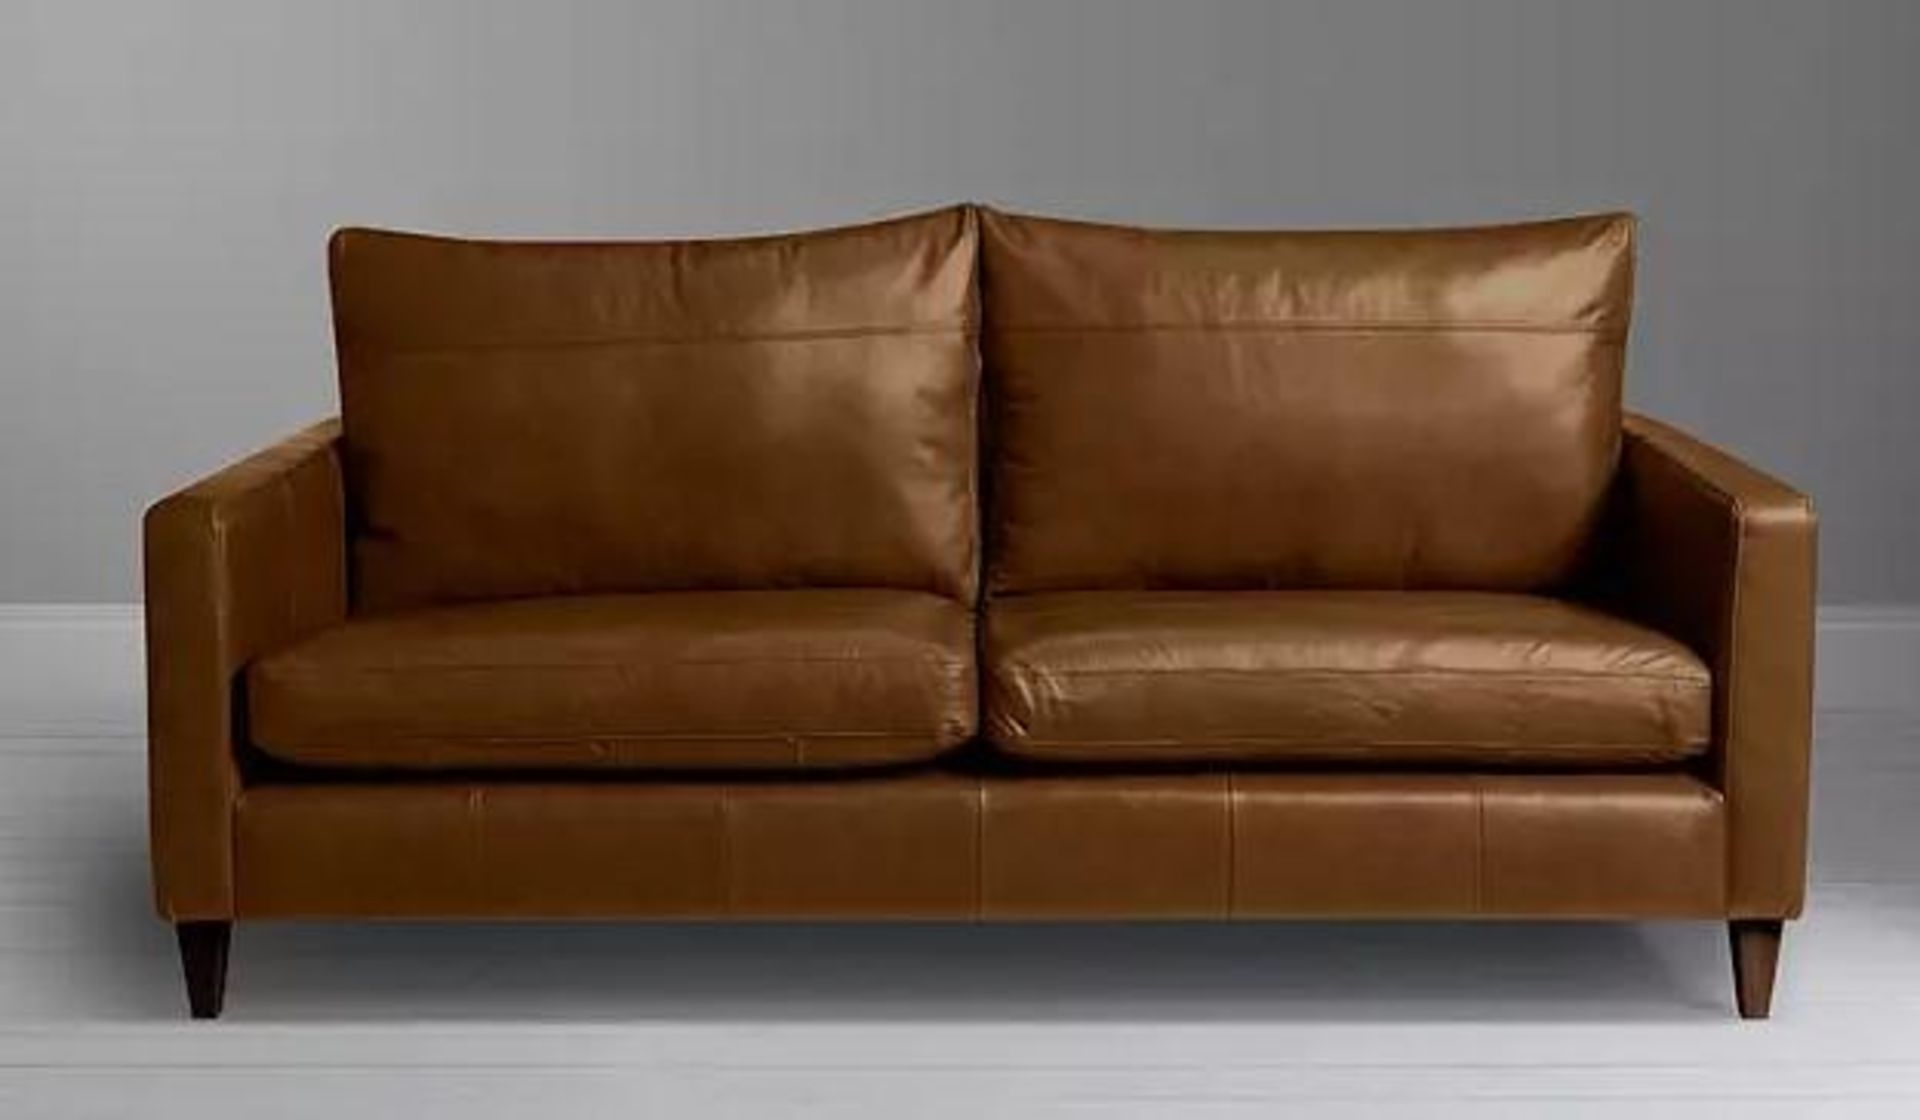 BRAND NEW John Lewis Bailey full leather 2 seater sofa in Tan. RRP: £1,599.00